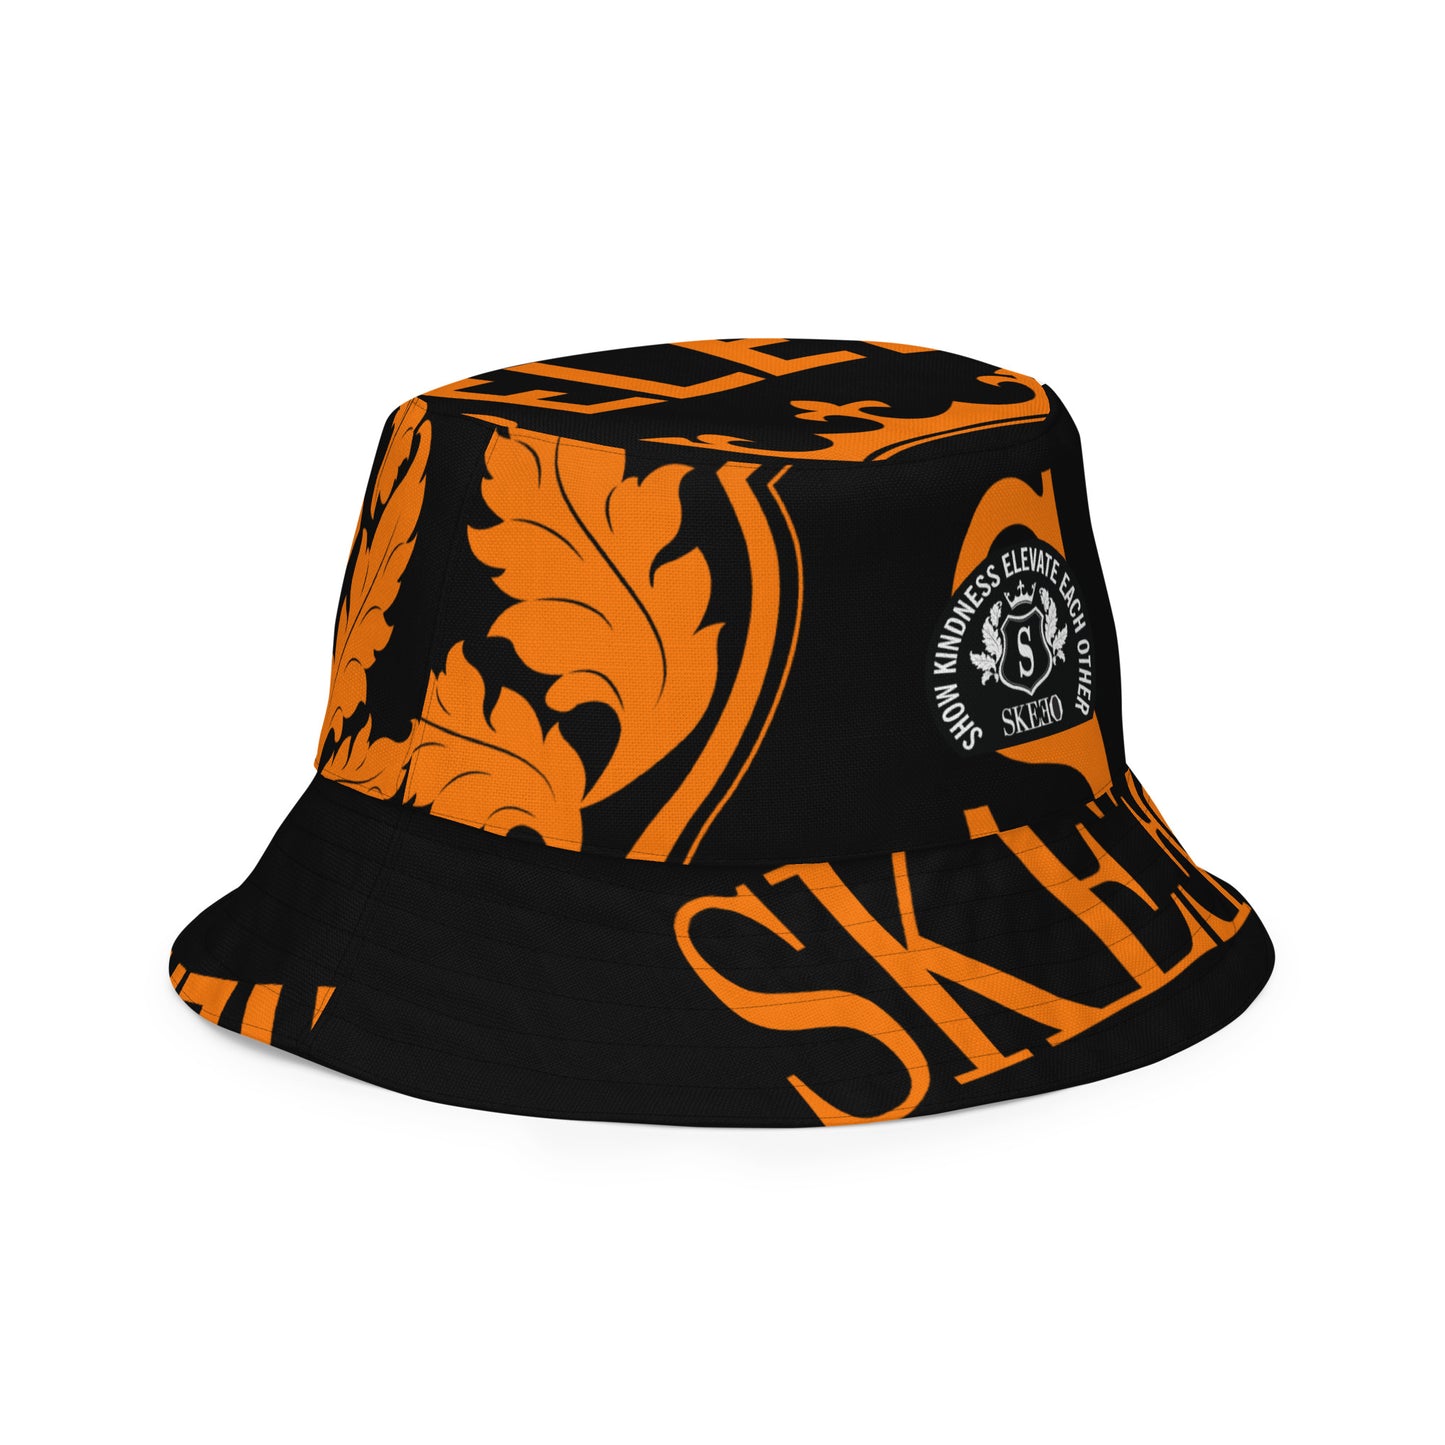 SK Amazin O Reversible bucket hat